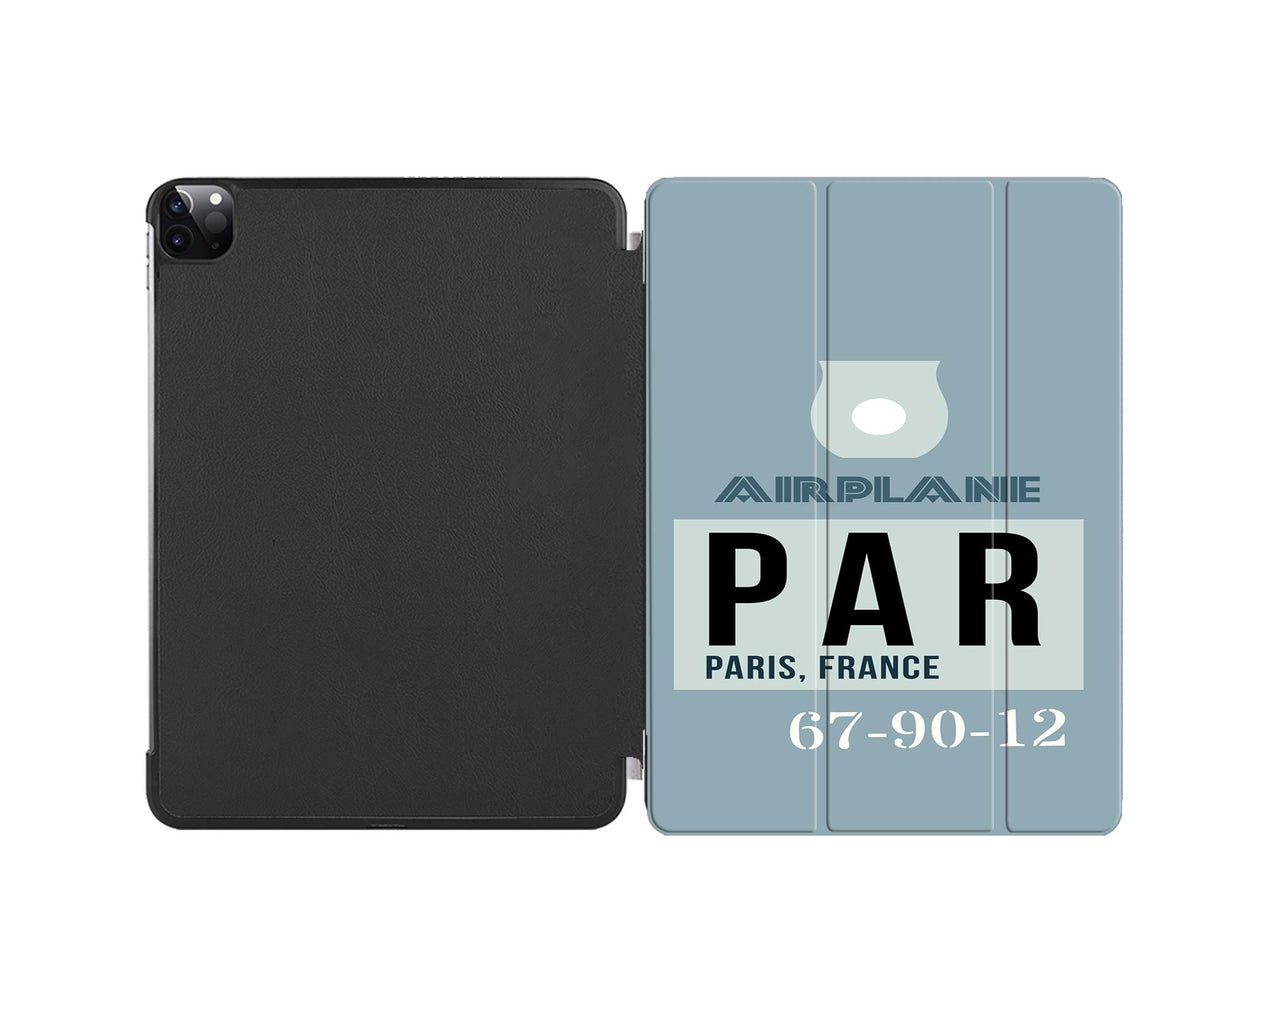 PAR - Paris France Luggage Tag Designed iPad Cases